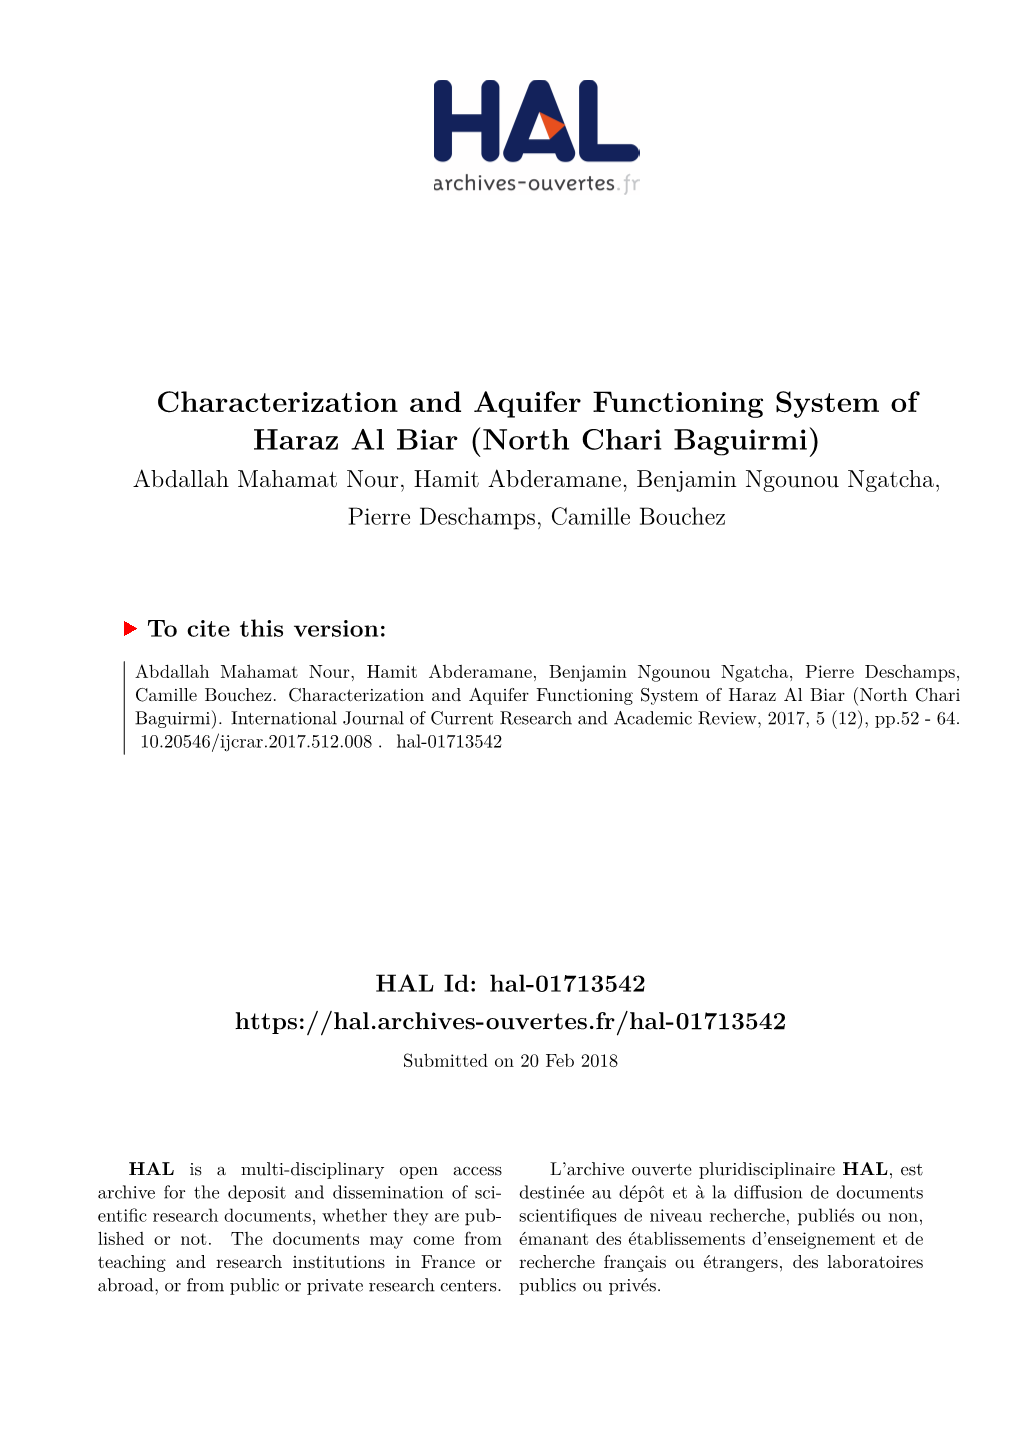 Characterization and Aquifer Functioning System of Haraz Al Biar